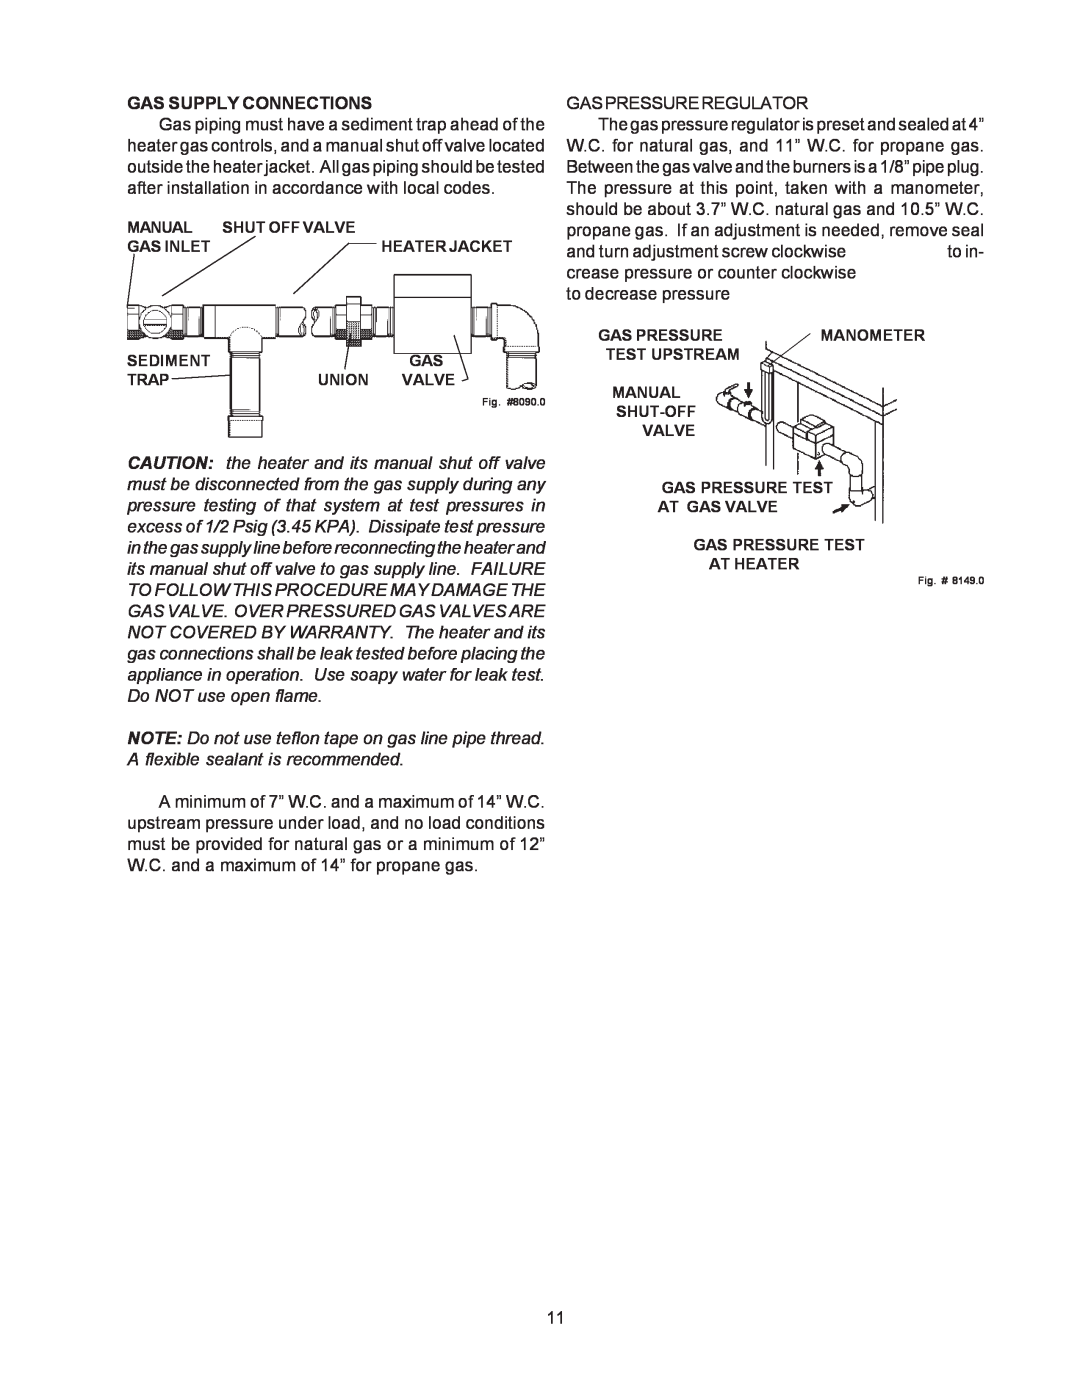 Raypak 514-824 manual Gas Supply Connections, Gaspressureregulator, to decrease pressure 